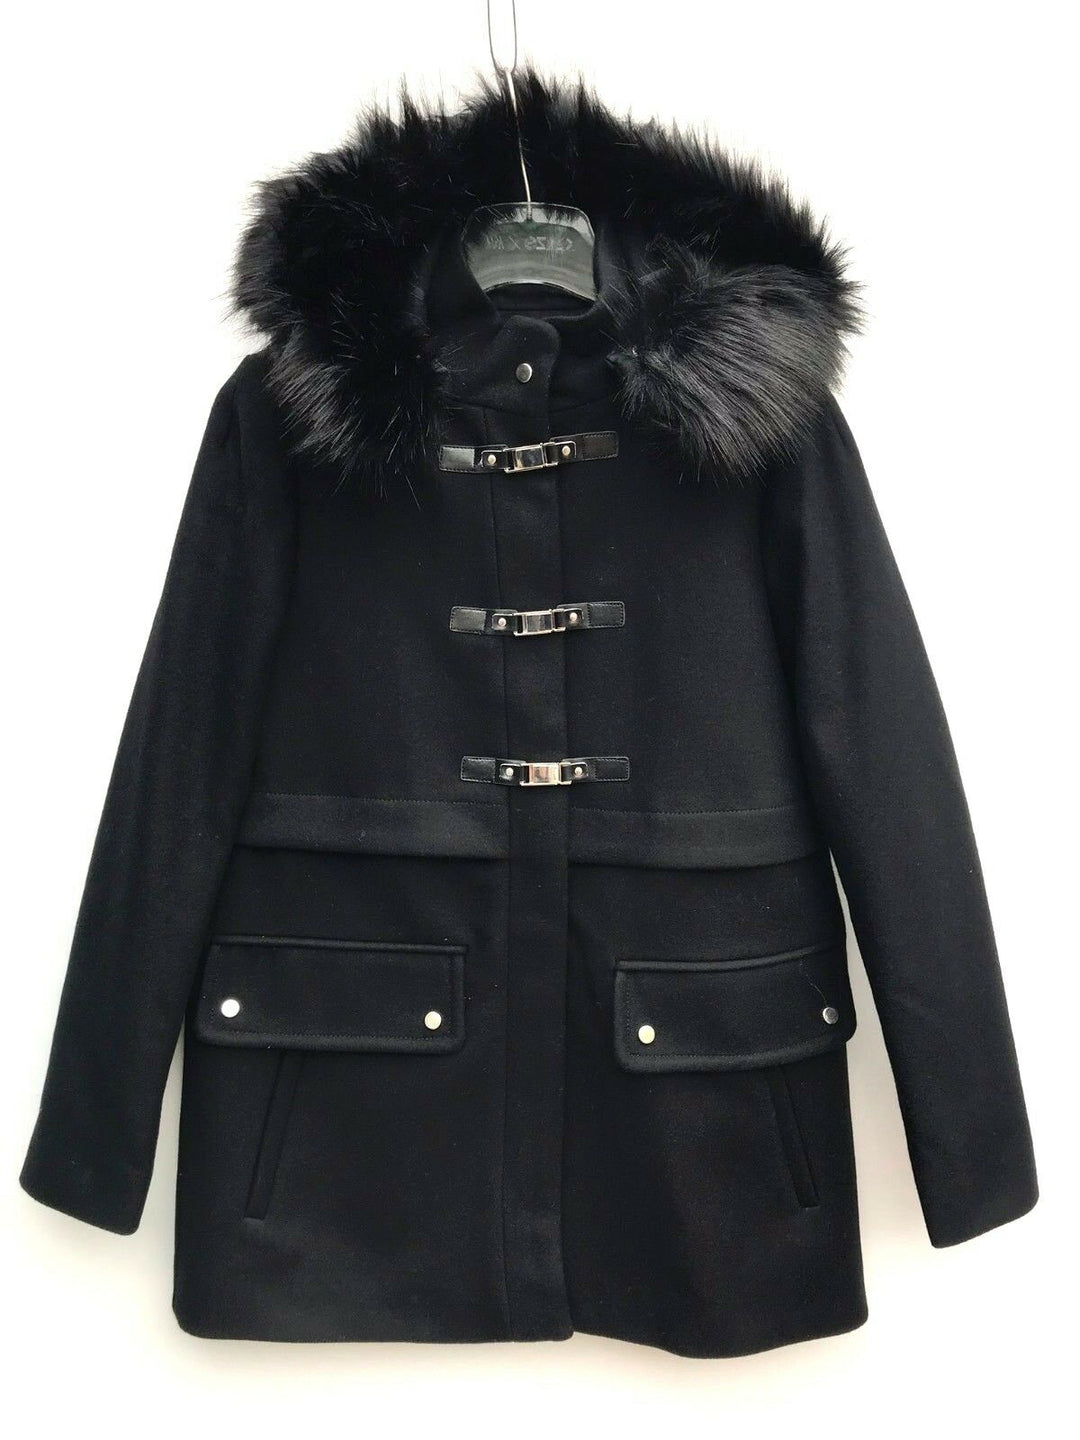 ZARA Duffle Coat Black Fur Hood